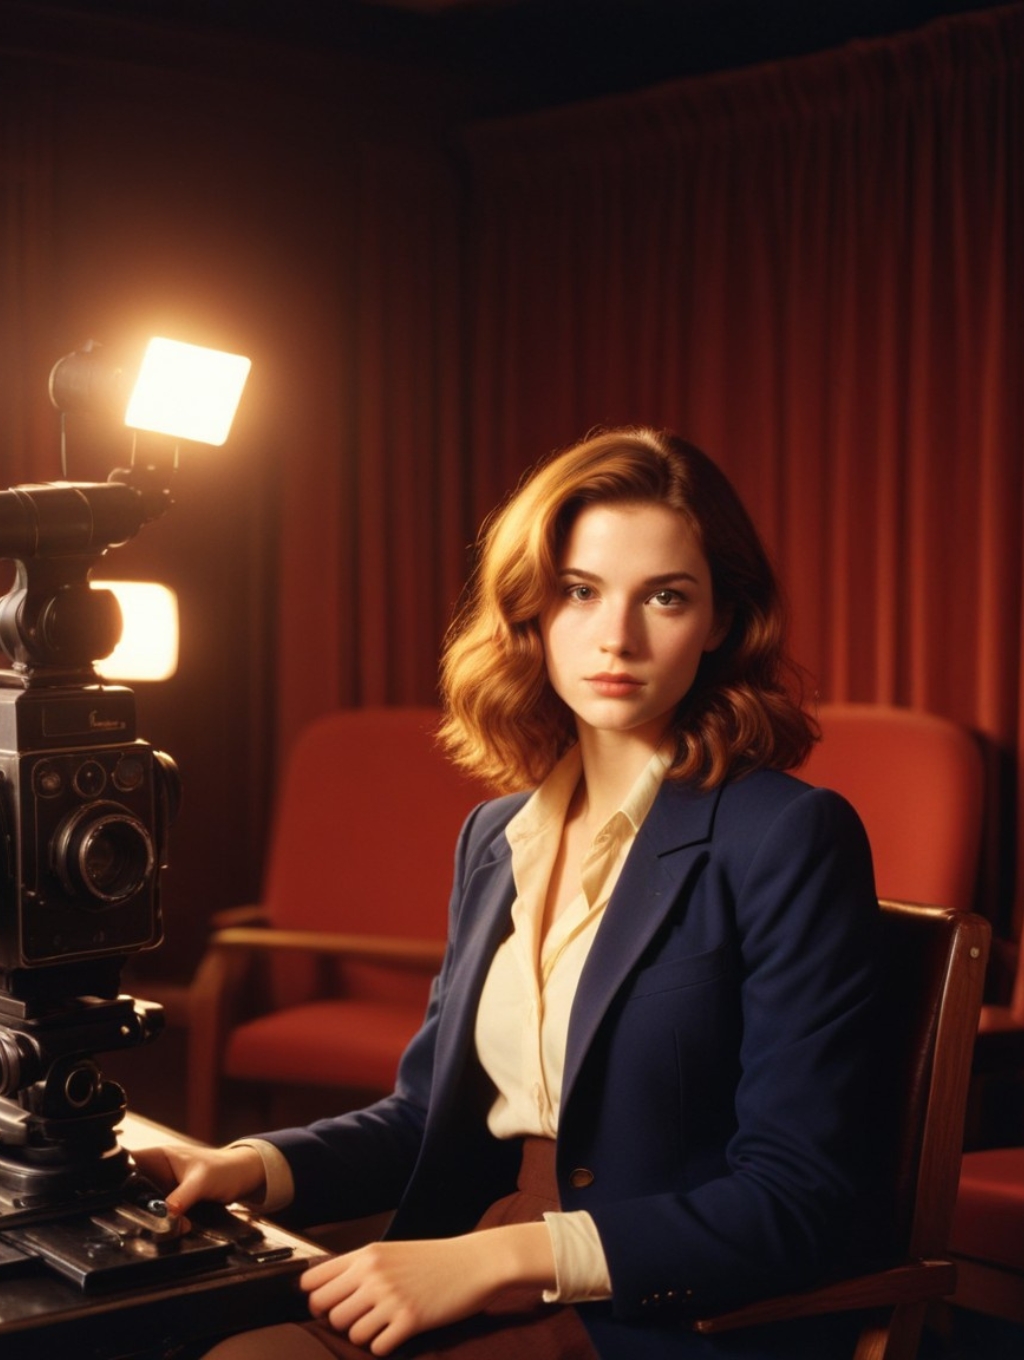 Hollywood Directors Chair Women: Art Portraits & Image Frames-Theme:3